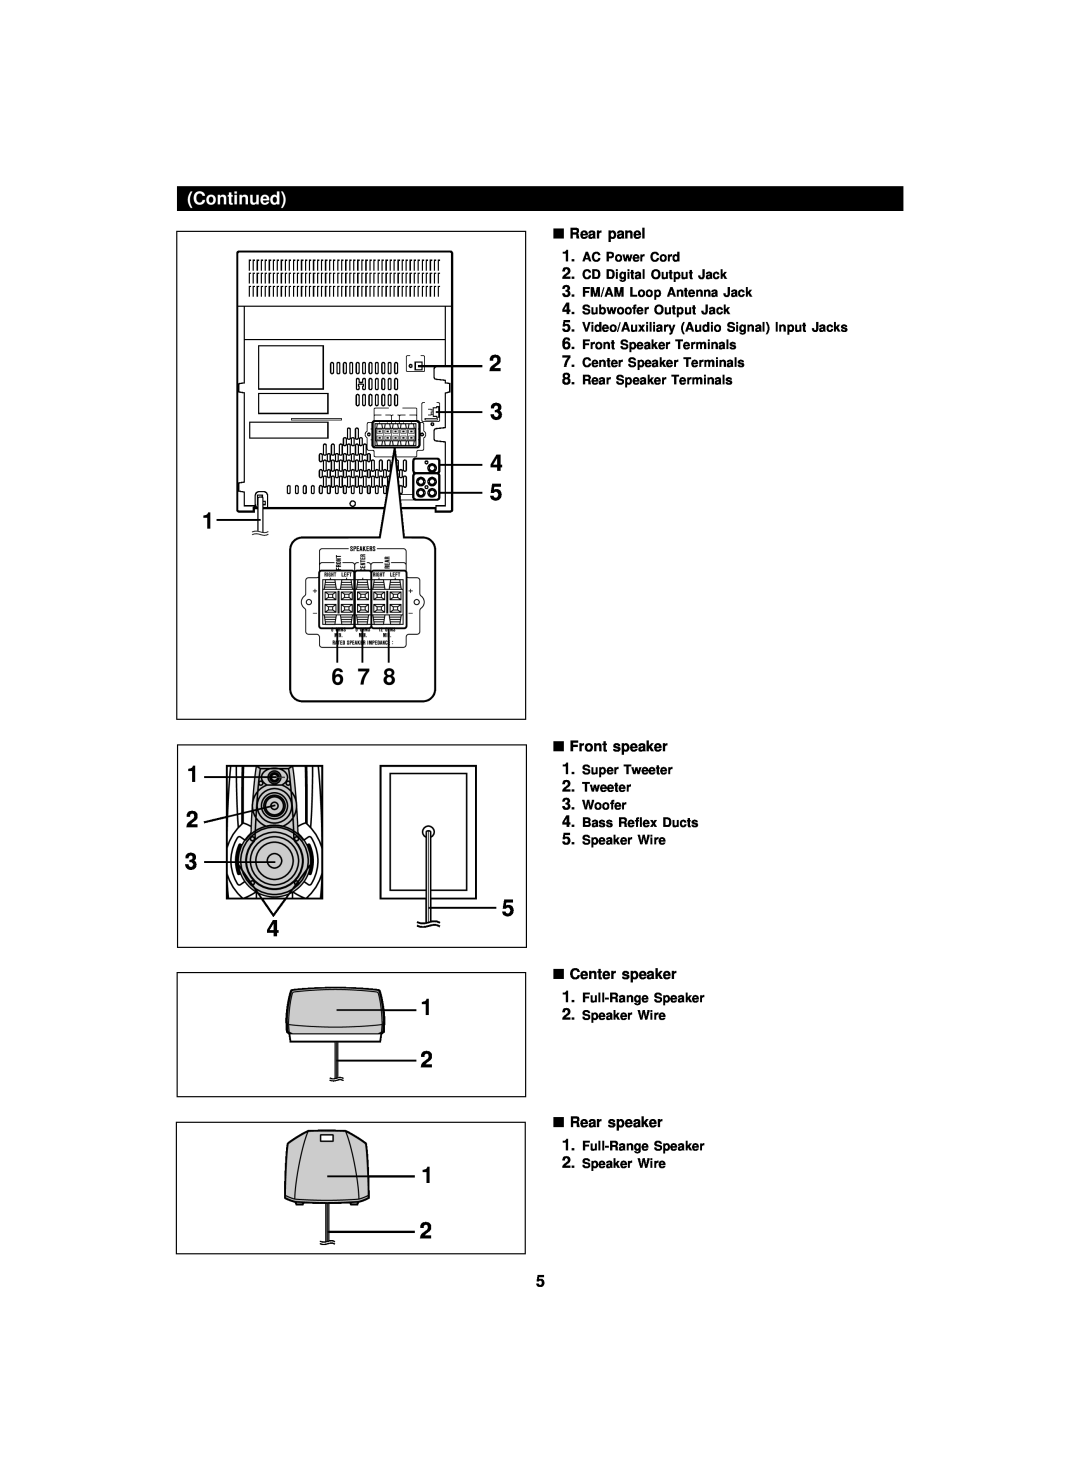 Sharp CDPC3500 operation manual Continued, Rear panel, Front speaker, Center speaker, Rear speaker 